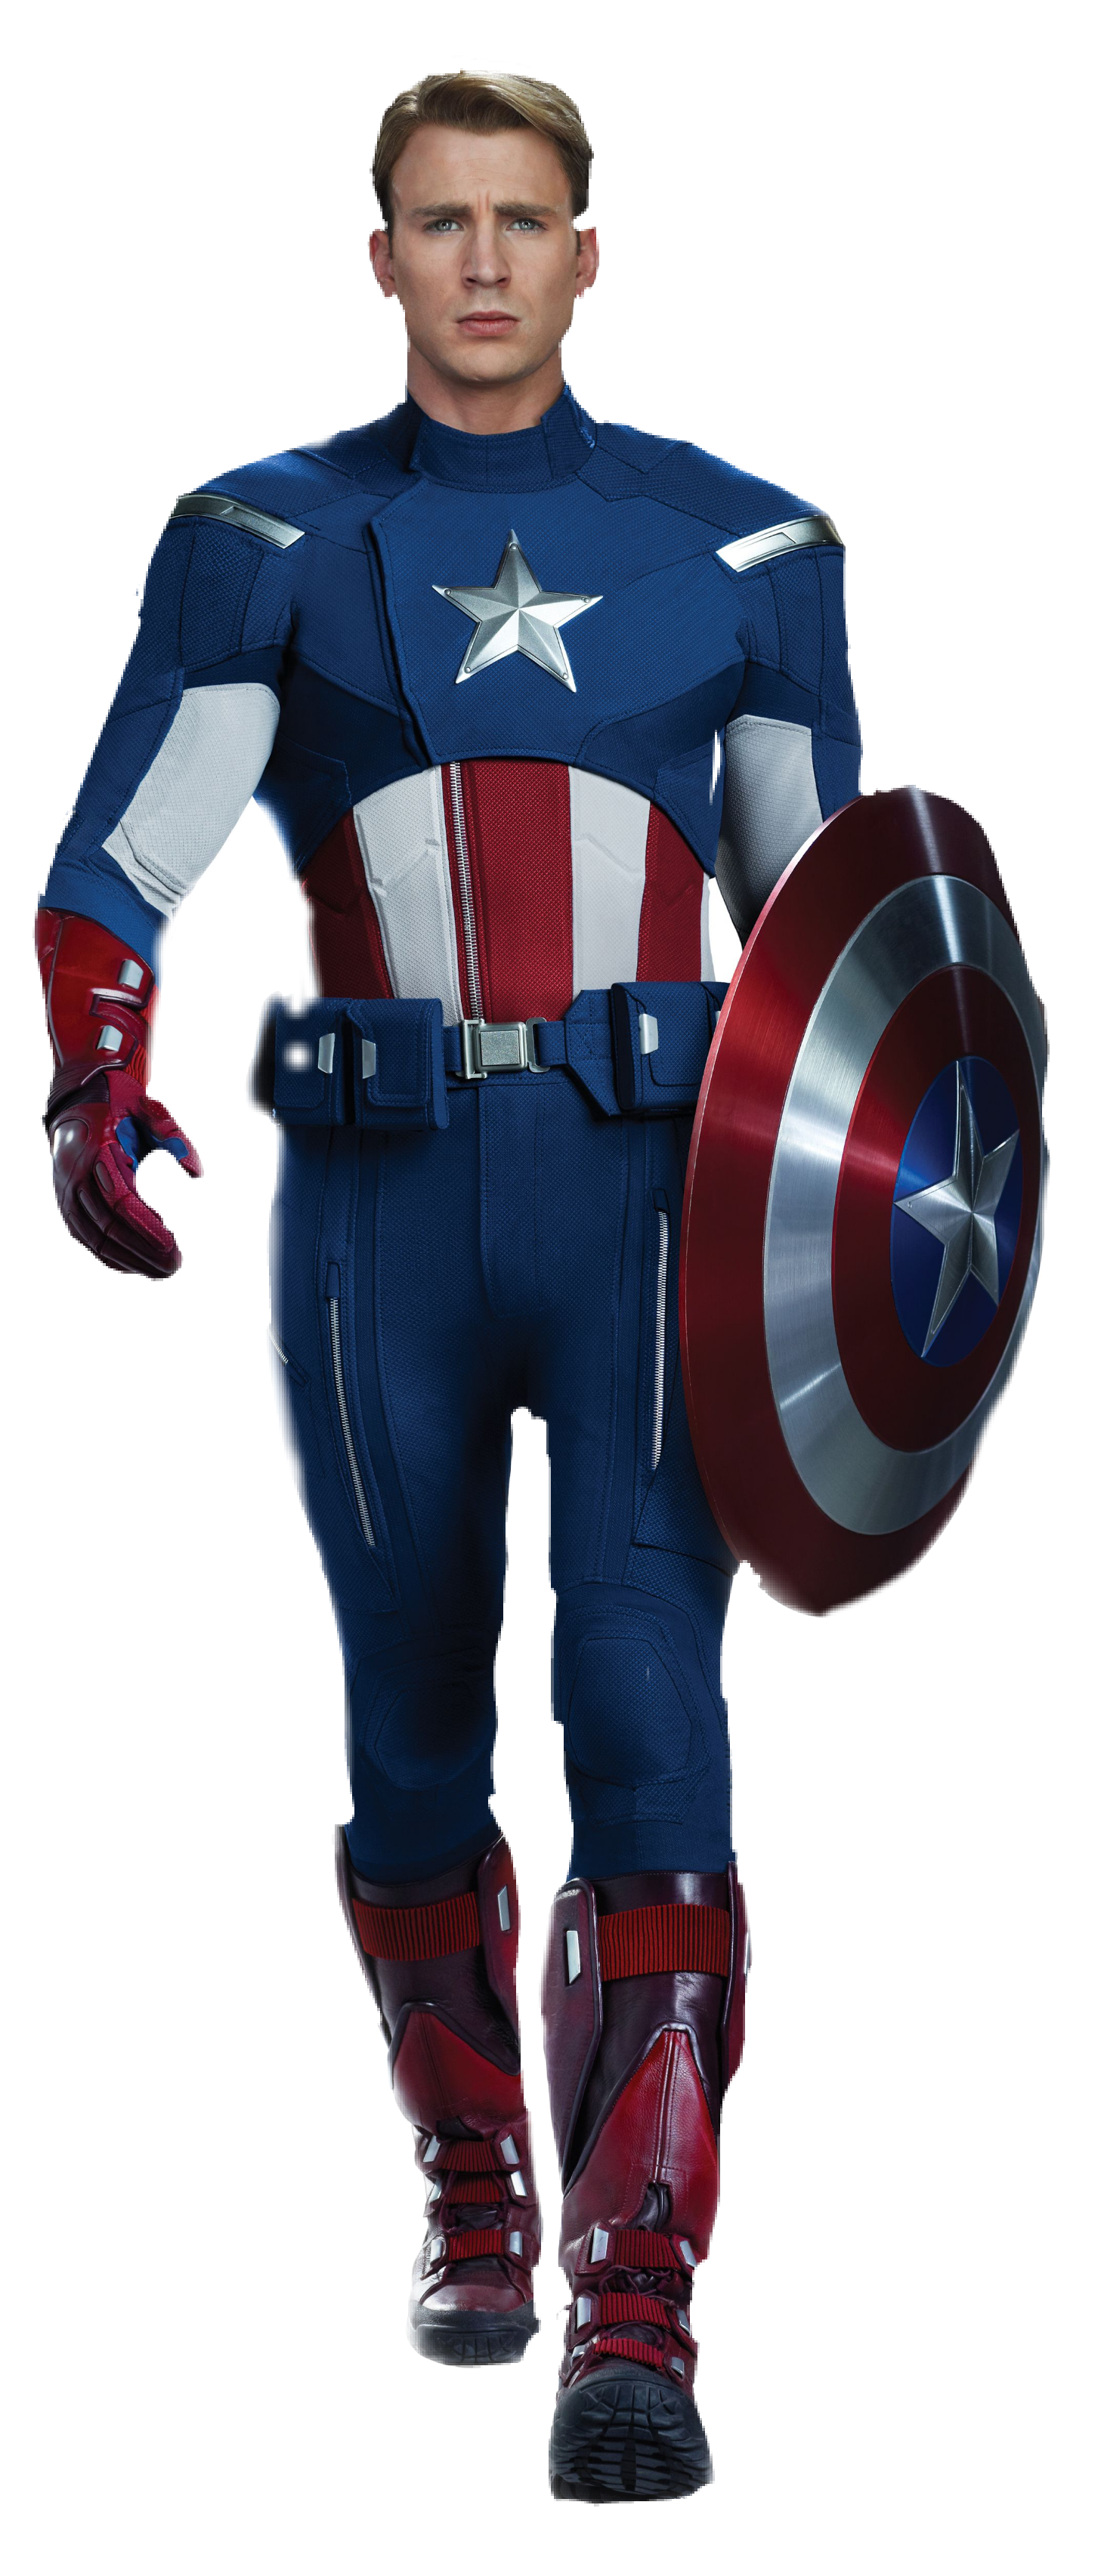 Capitanamerica Marvel Capitaoamerica Avengers Vingado Captain America Avengers